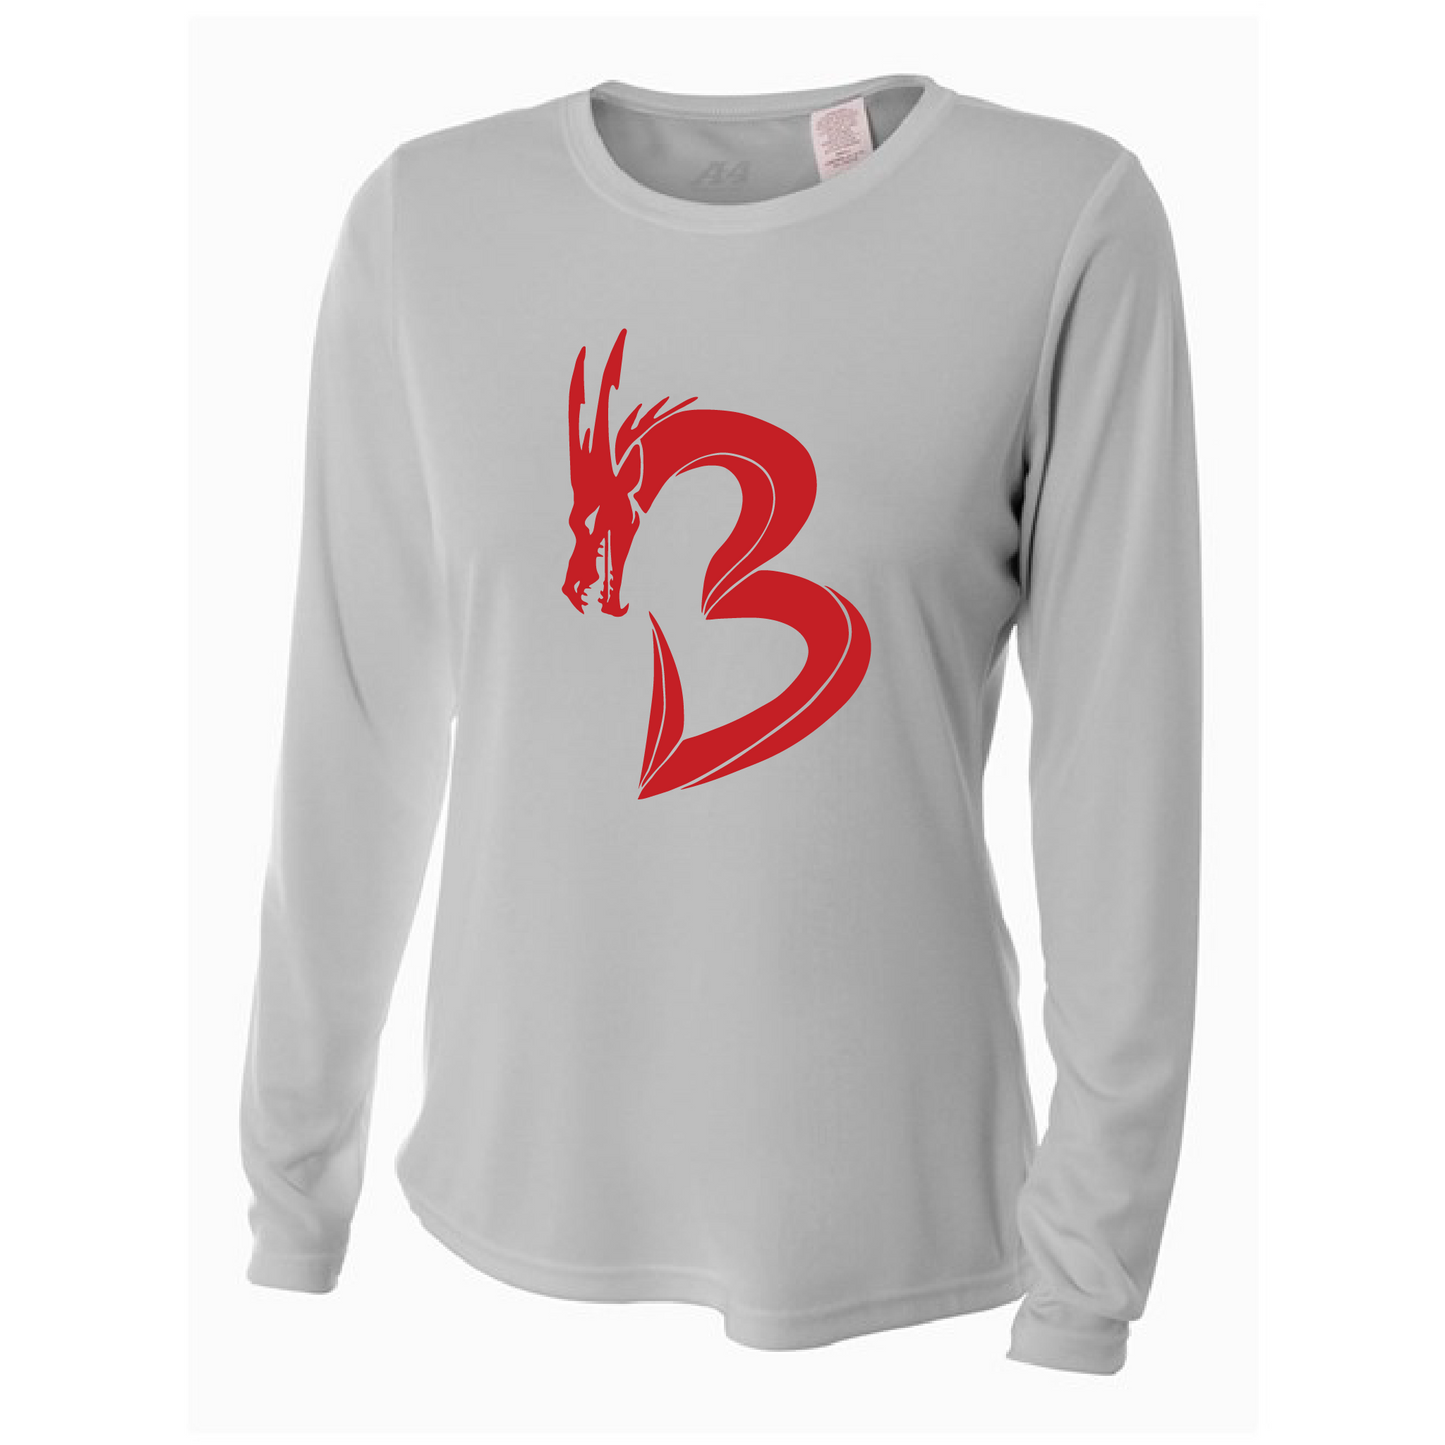 Womens L/S T-Shirt - NP Bands "B" Dragon (red)